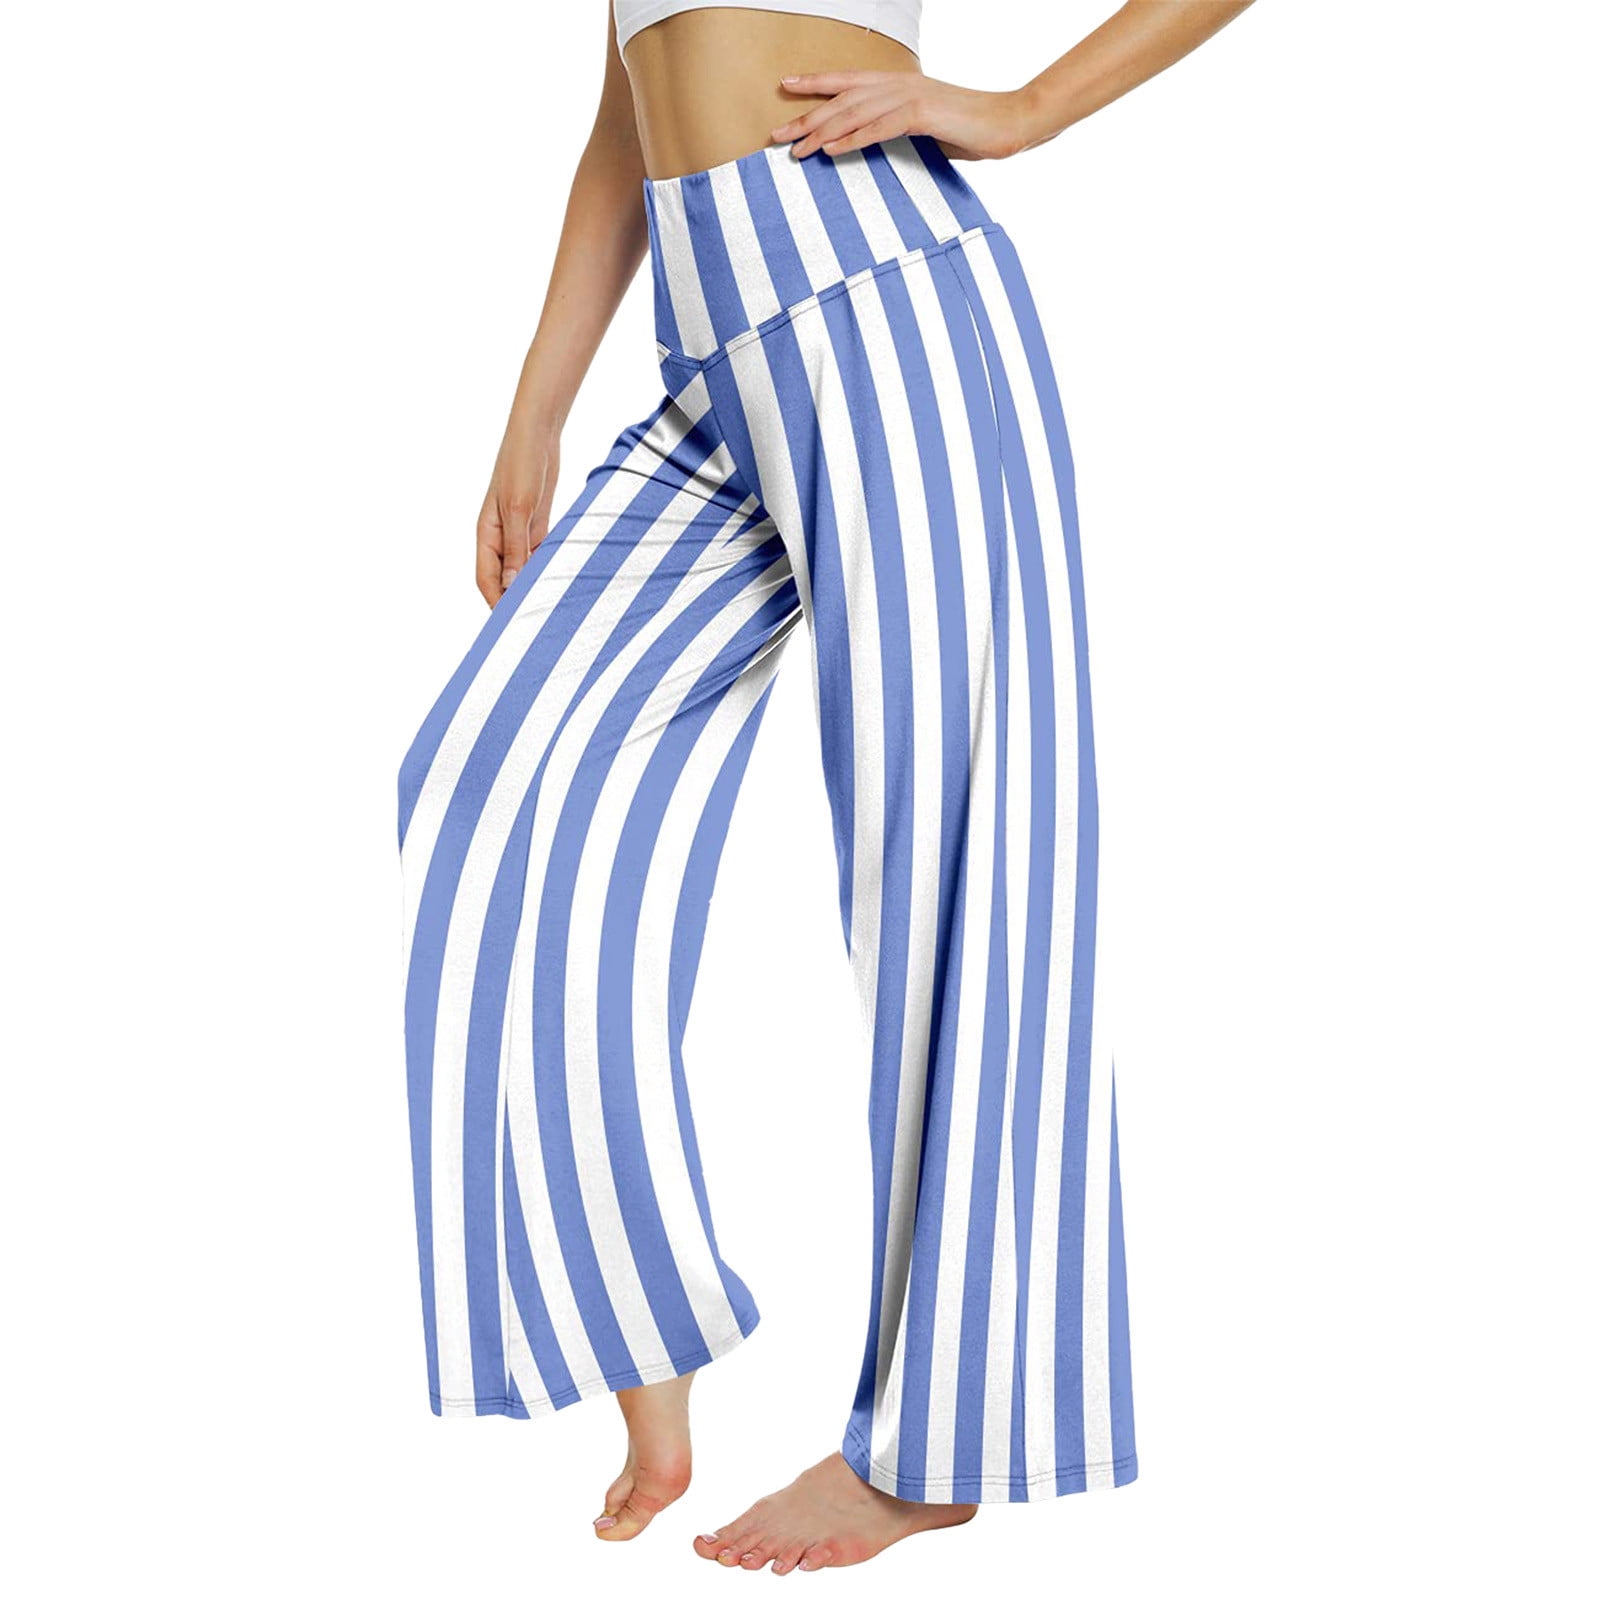 CAICJ98 Pants for Women Women's High Waist Pleated Suit Pants Casual Wide  Leg Loose Fit Trouser Pants with Pocket Light Blue,XL